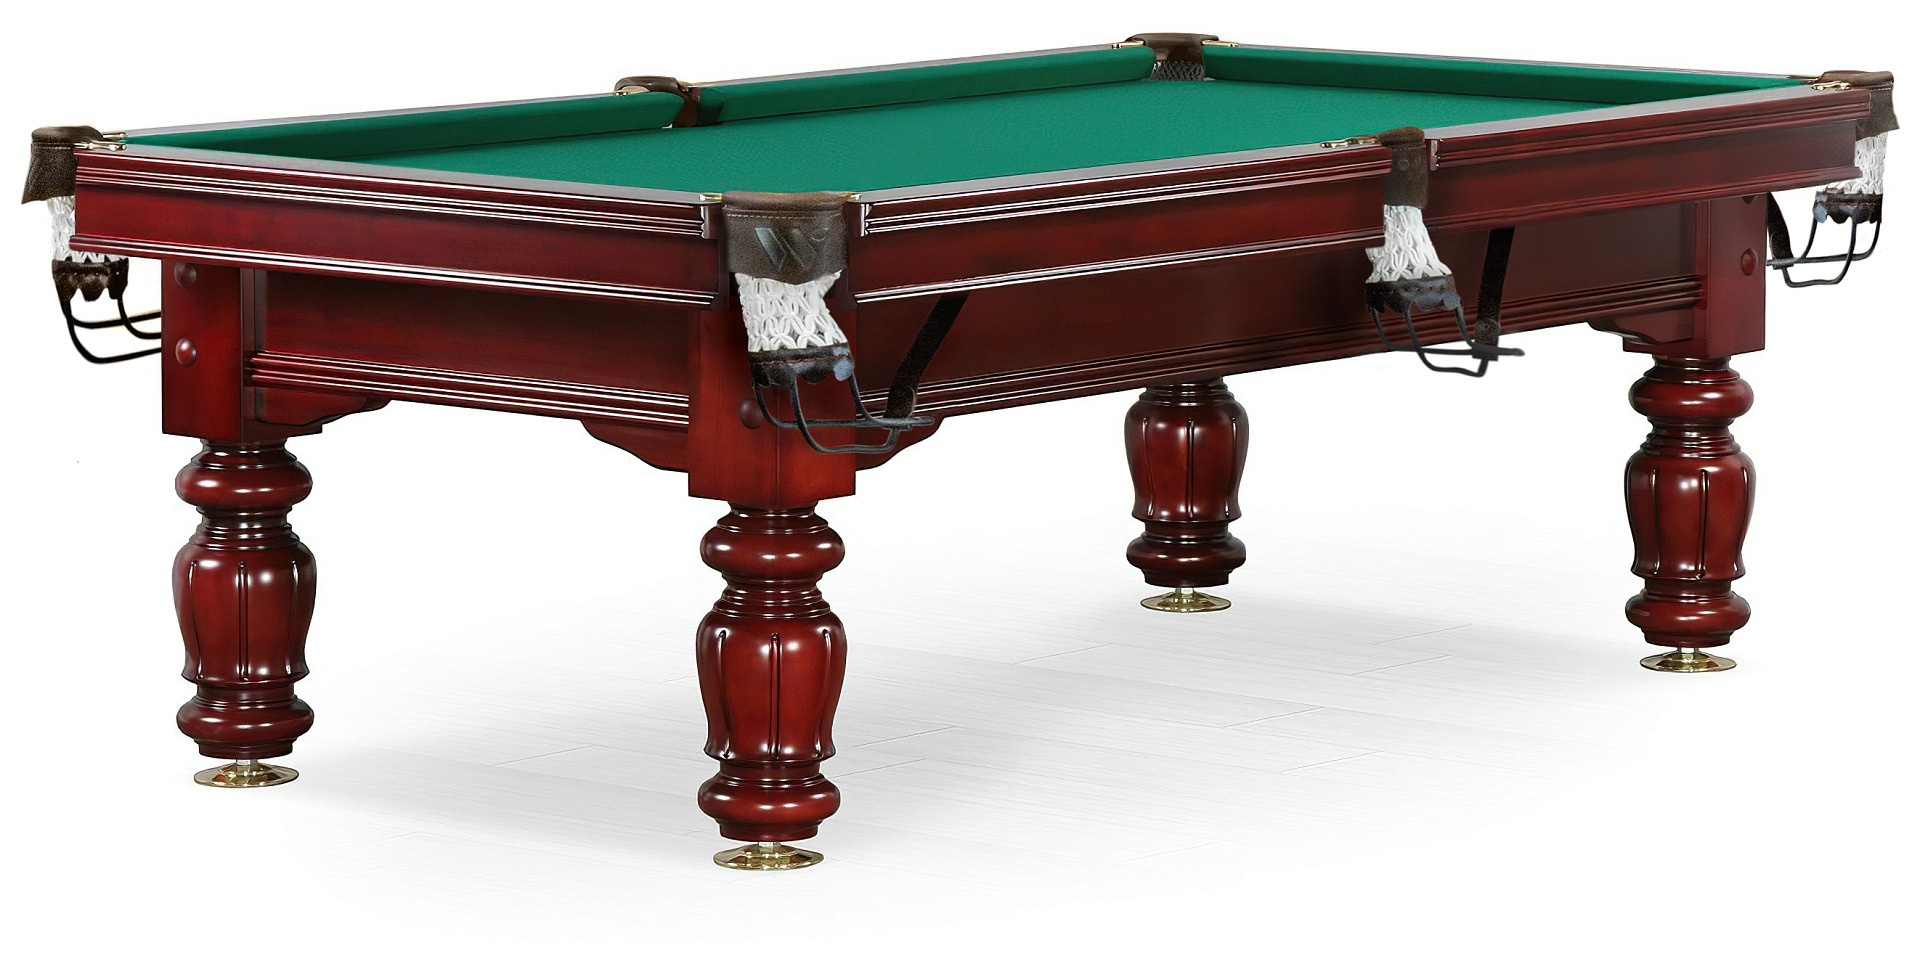 Weekend Billiard Classic II - 8 футов (махагон) из каталога бильярдных столов в Санкт-Петербурге по цене 149955 ₽